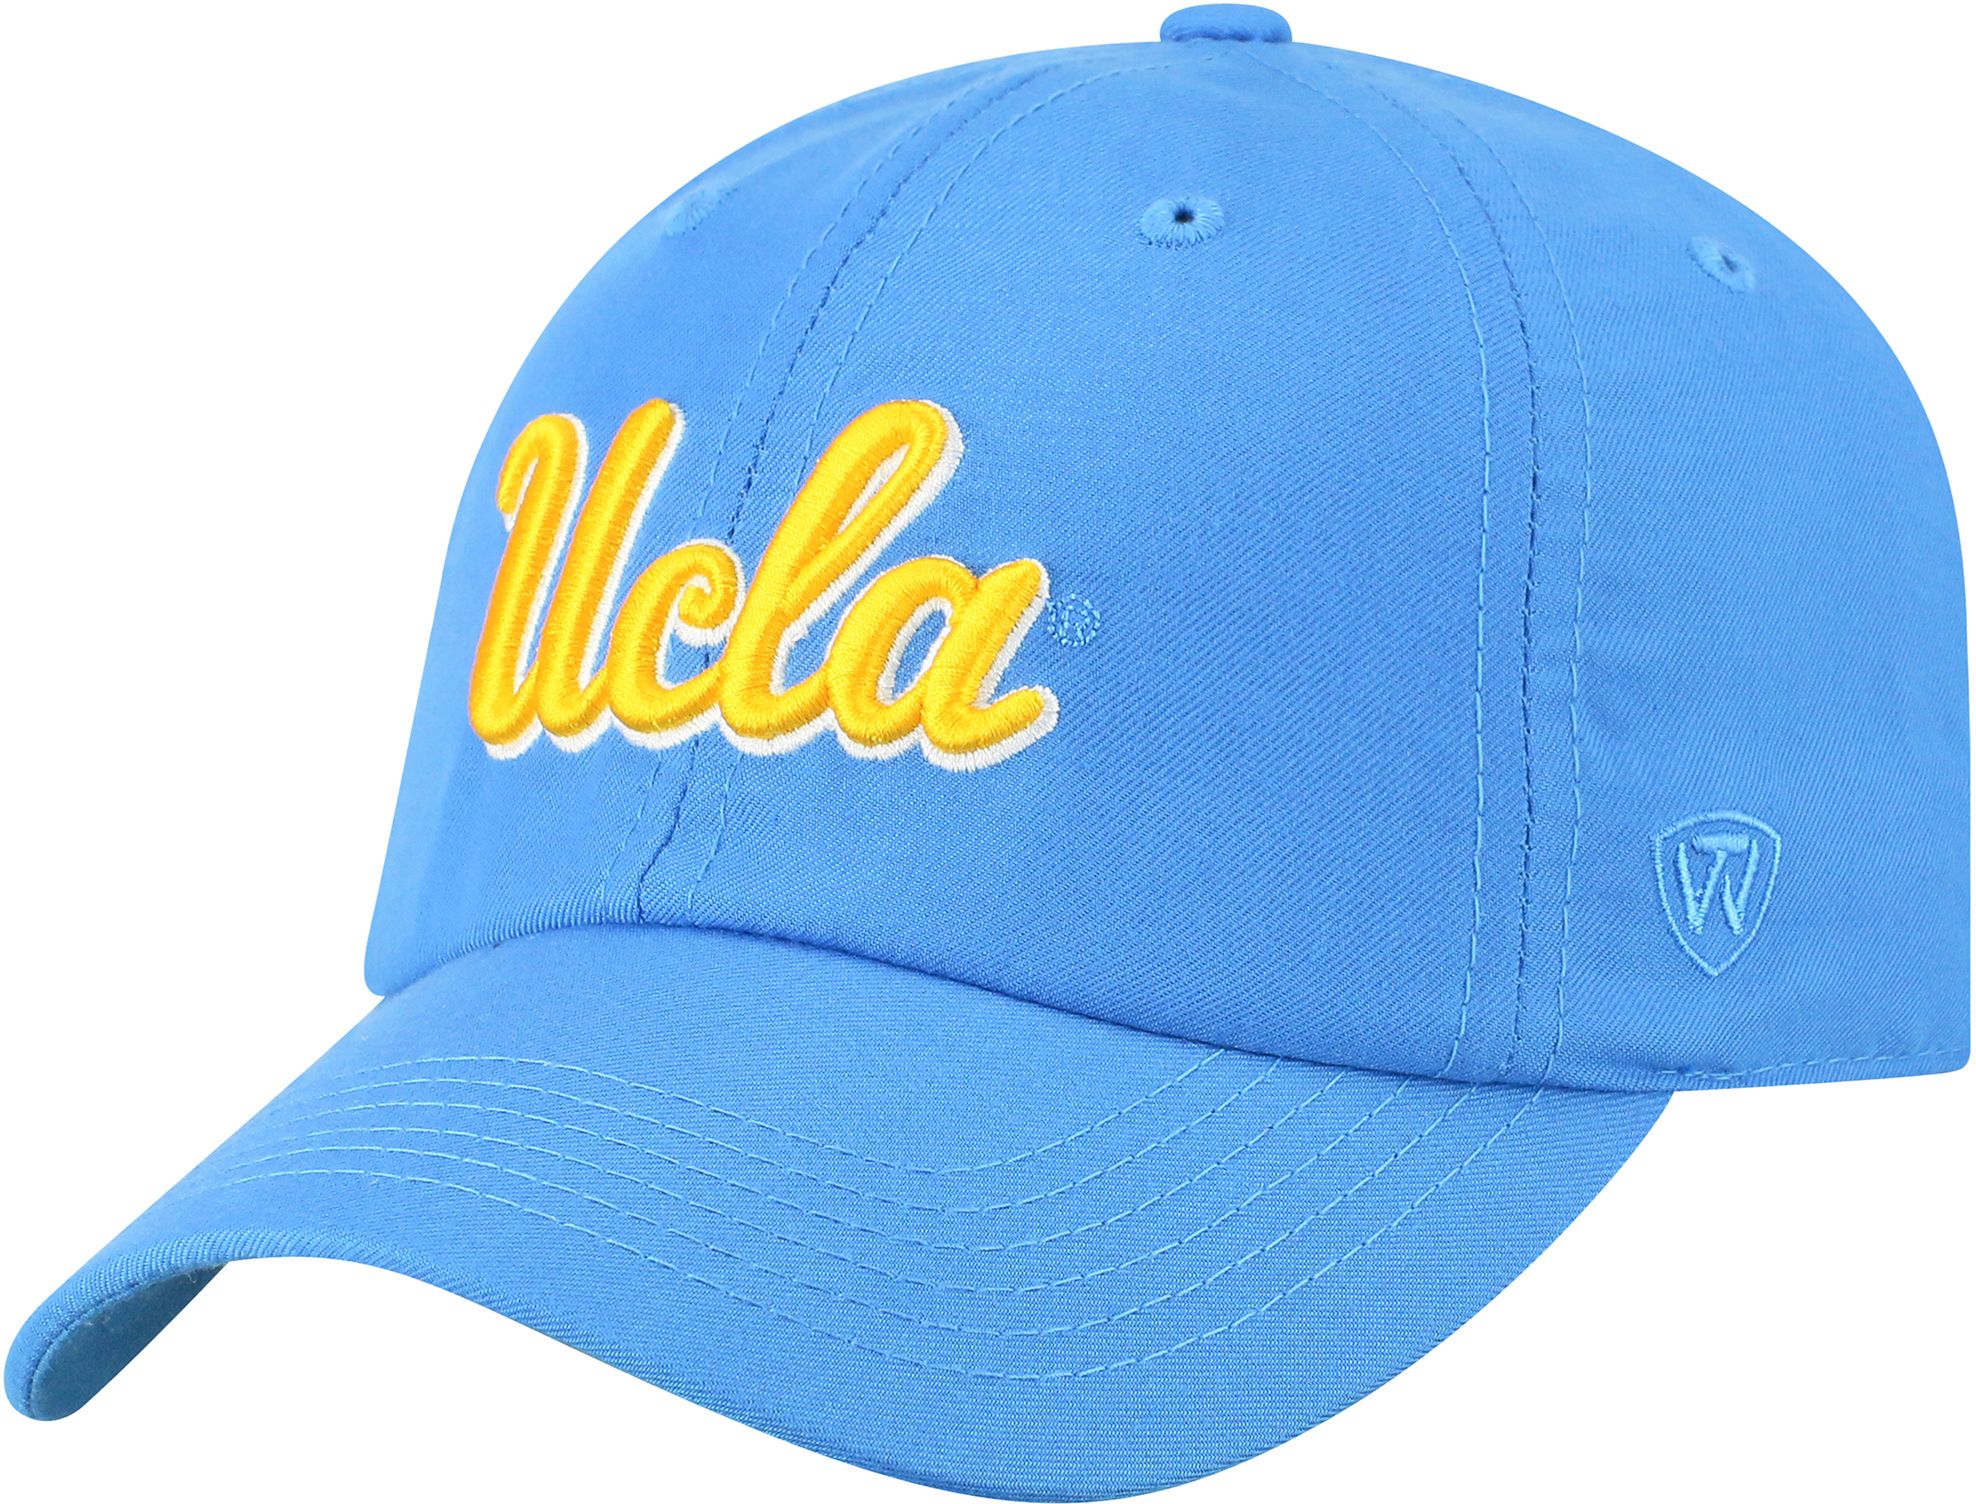 Original Retro Brand Men's UCLA Bruins White Russell Westbrook Replica  Basketball Jersey